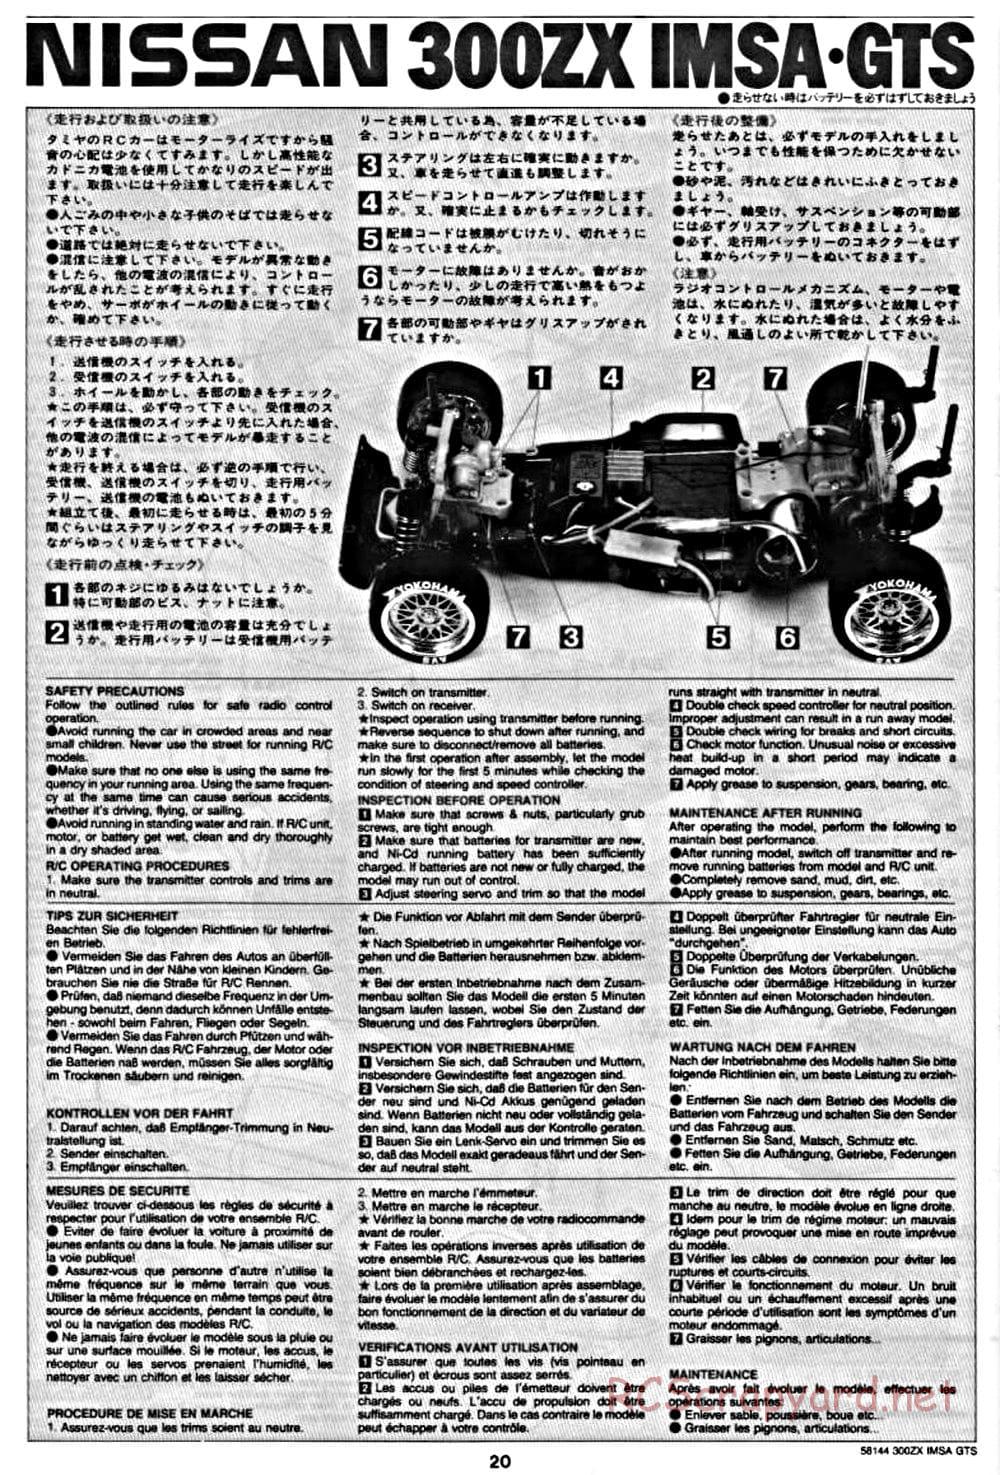 Tamiya - Nissan 300ZX IMSA-GTS - TA-02W Chassis - Manual - Page 20